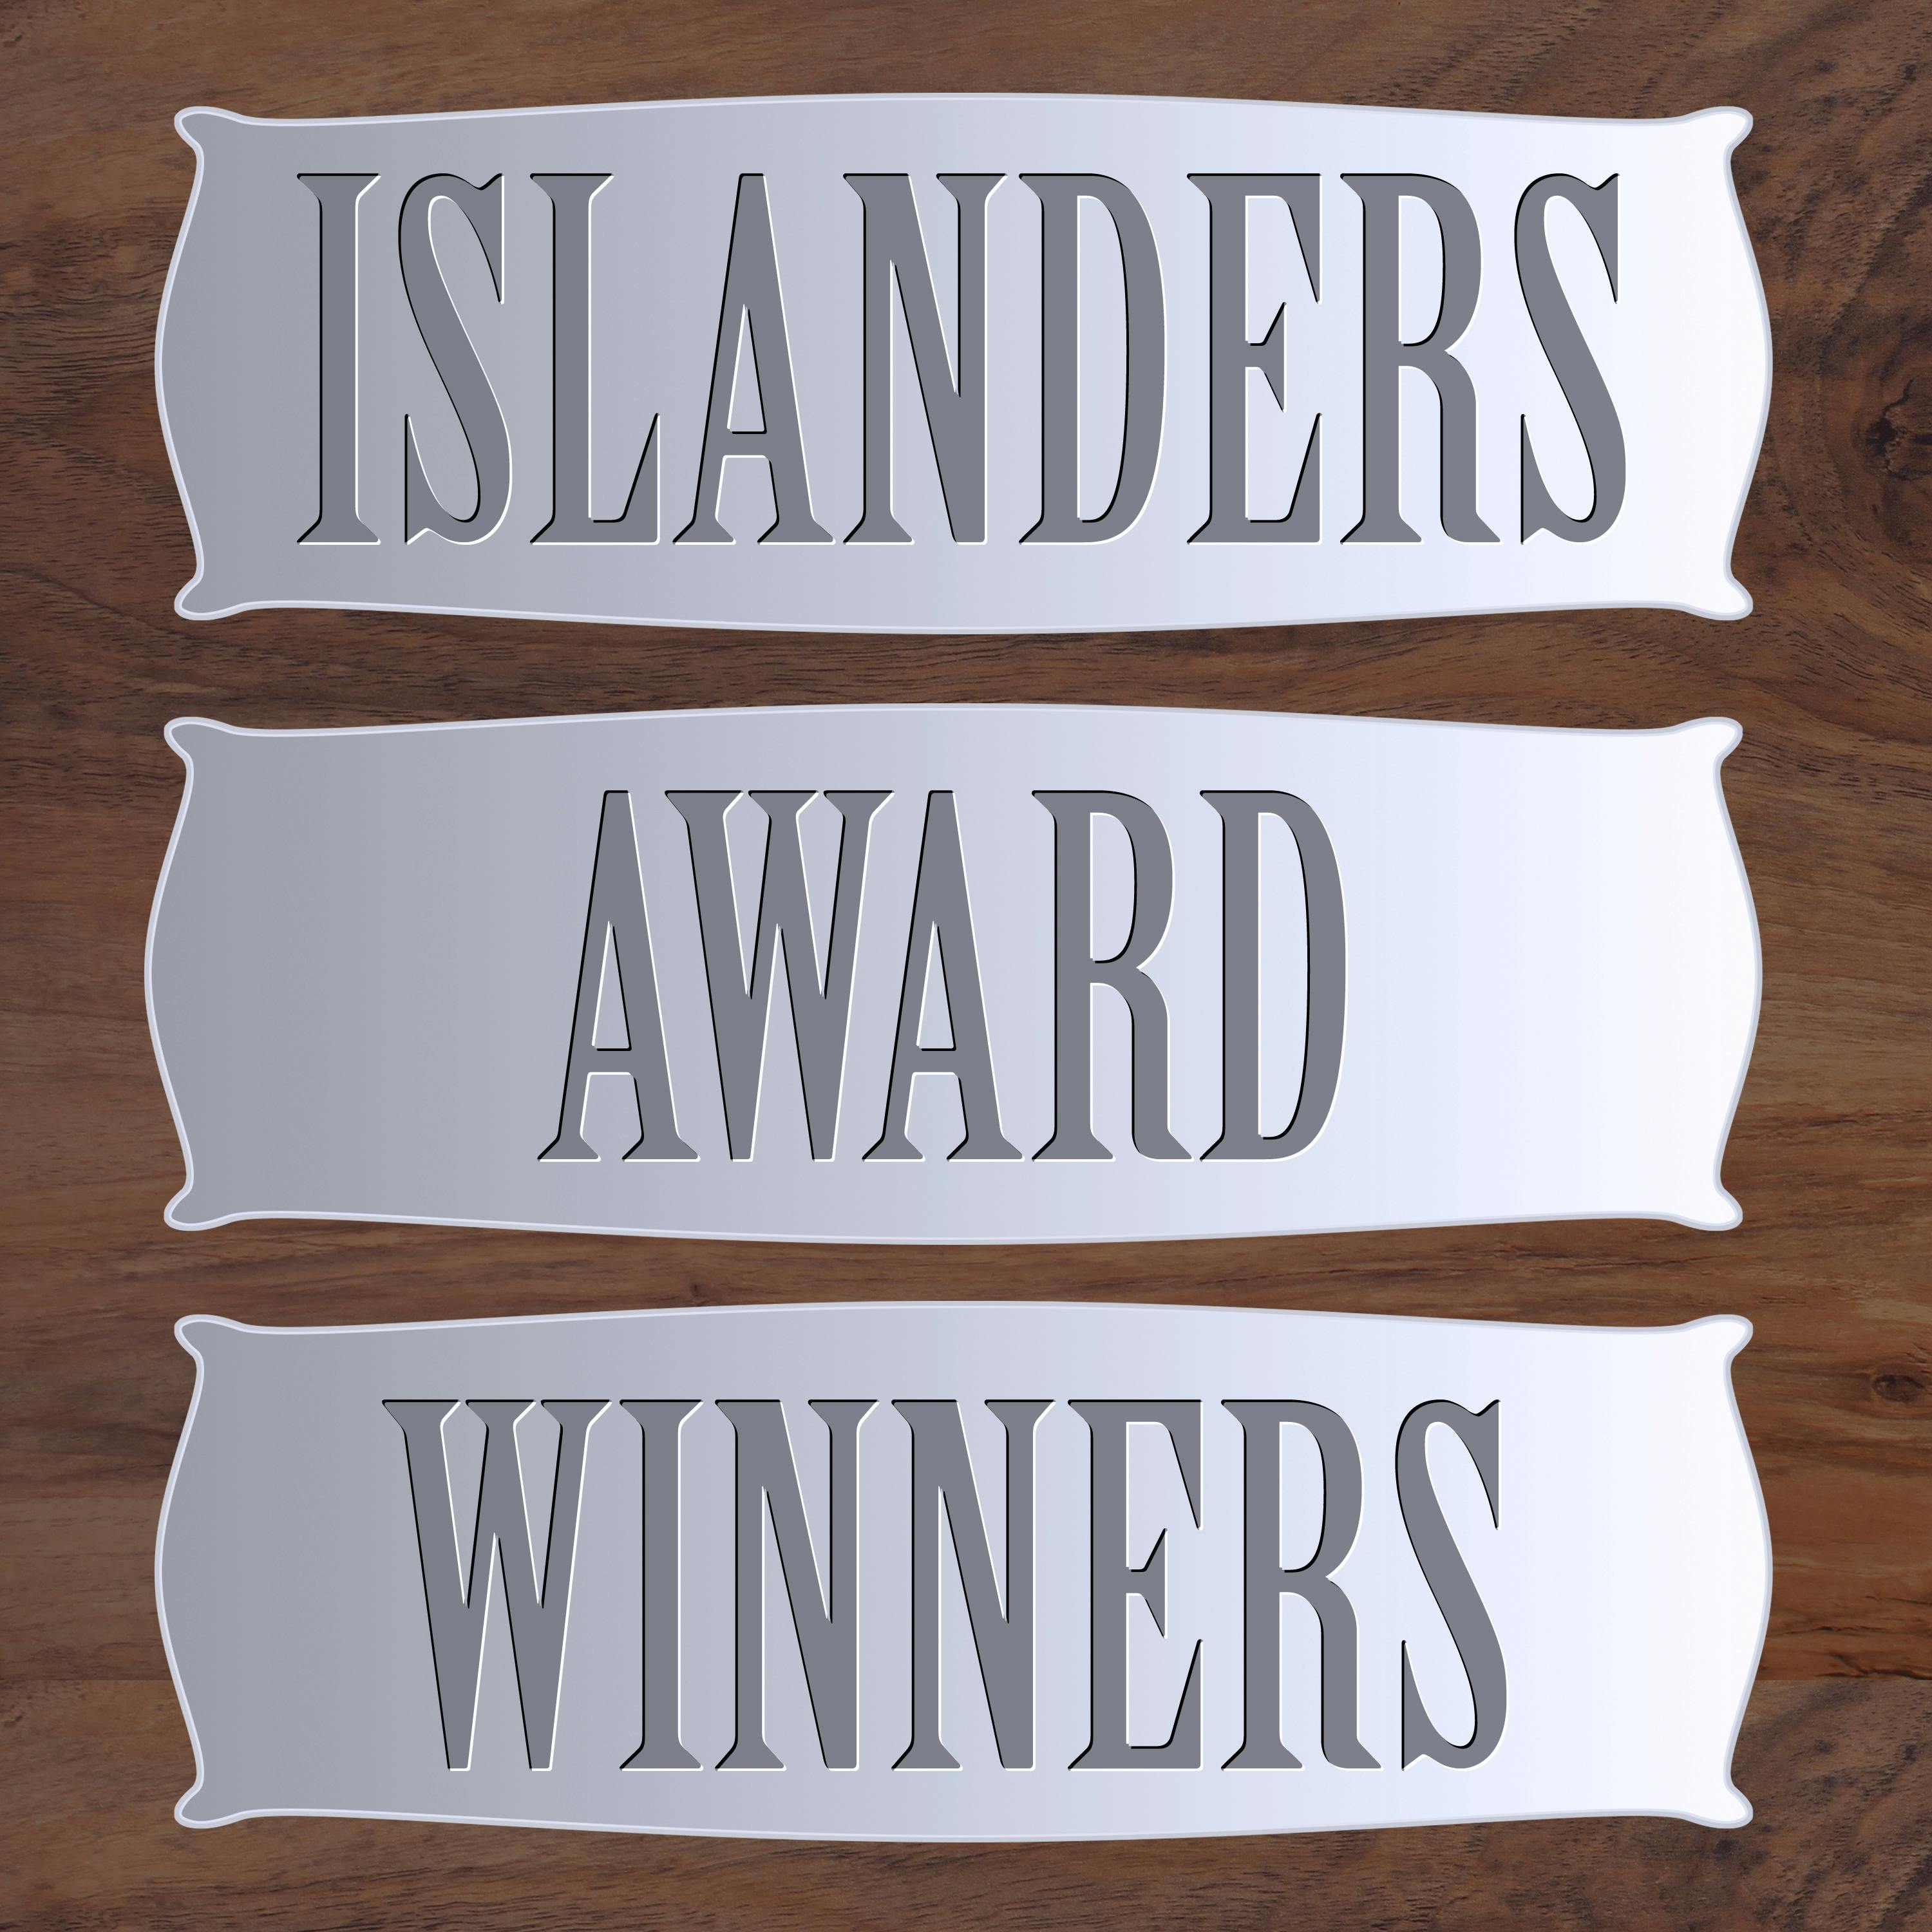 Islanders Award Winners: Mike Bossy, Calder Trophy, 1978 (Part 2)